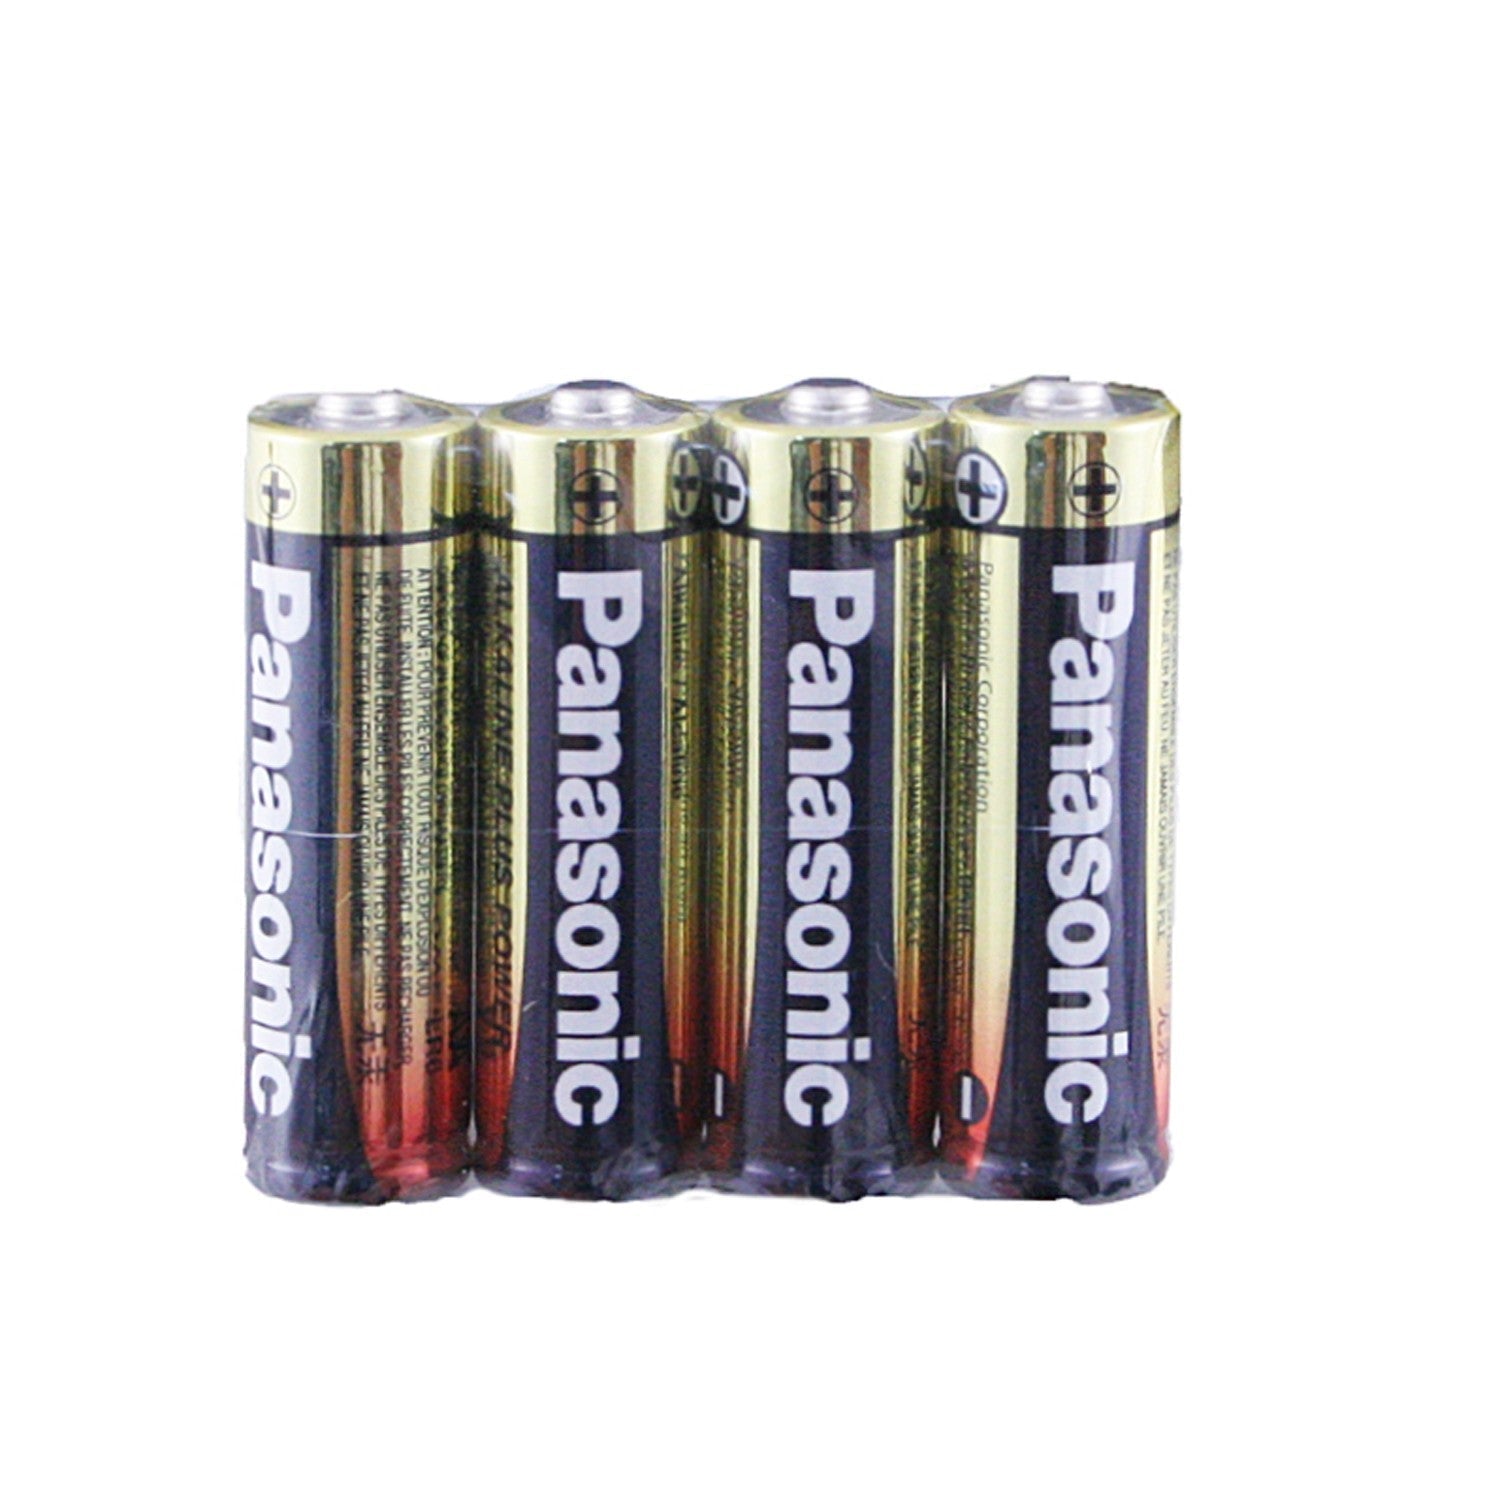 Panasonic Alkaline Batteries